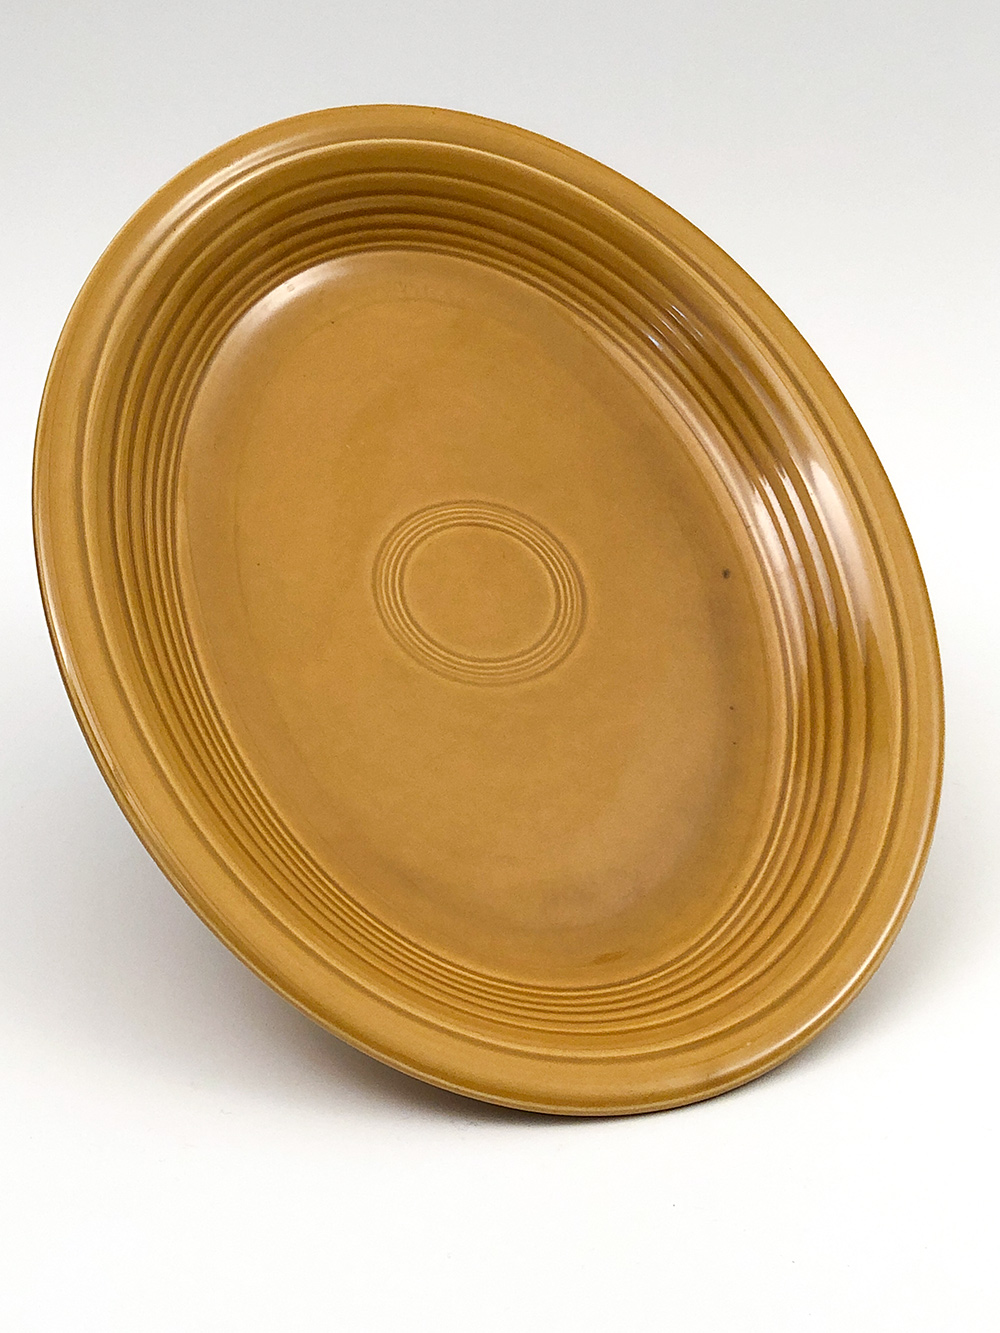 fiesta ironstone platter in antique gold